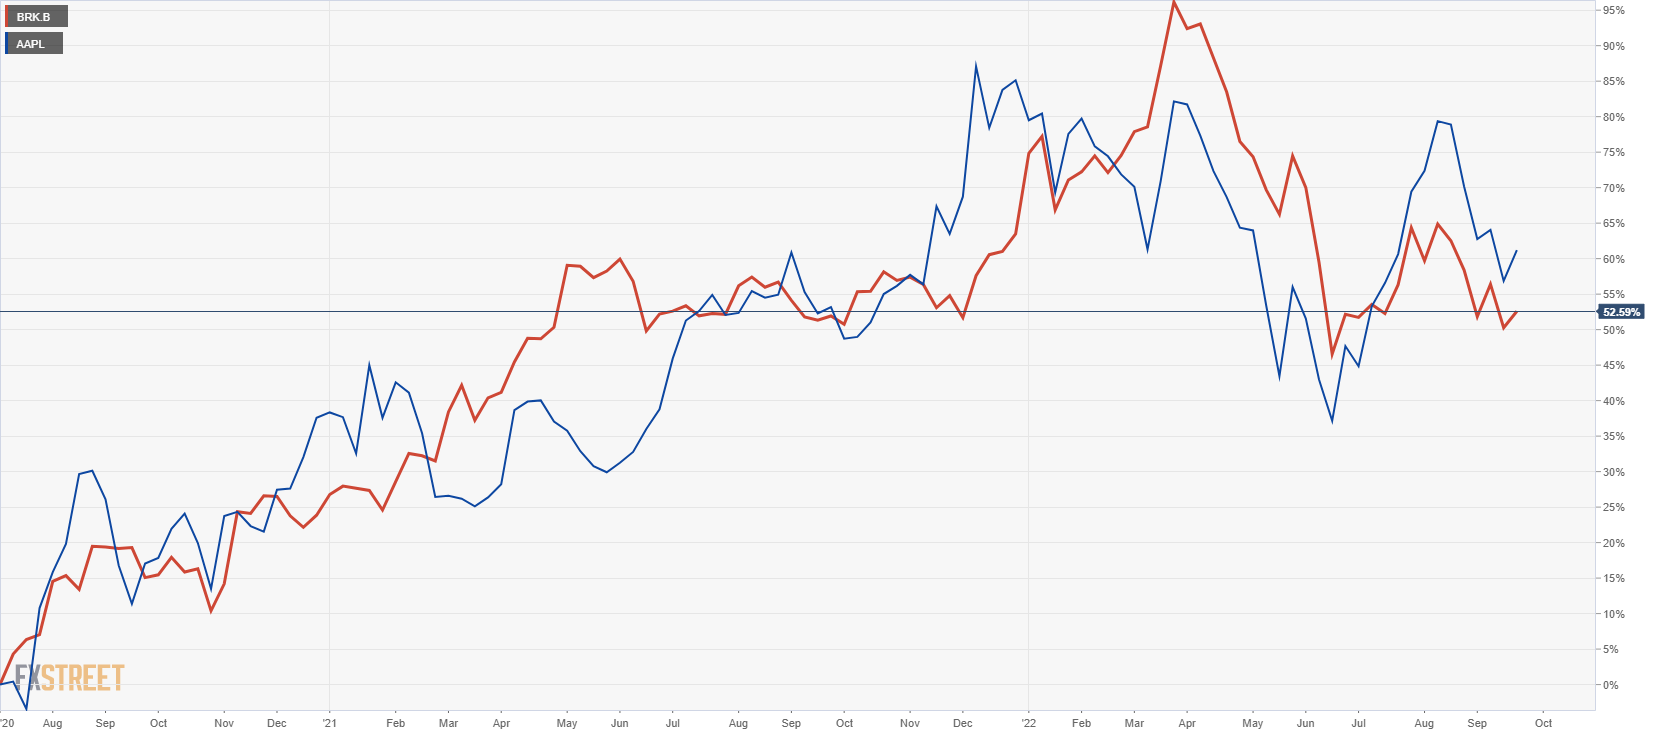 Berkshire Hathaway shares vs Apple stock comparison chart